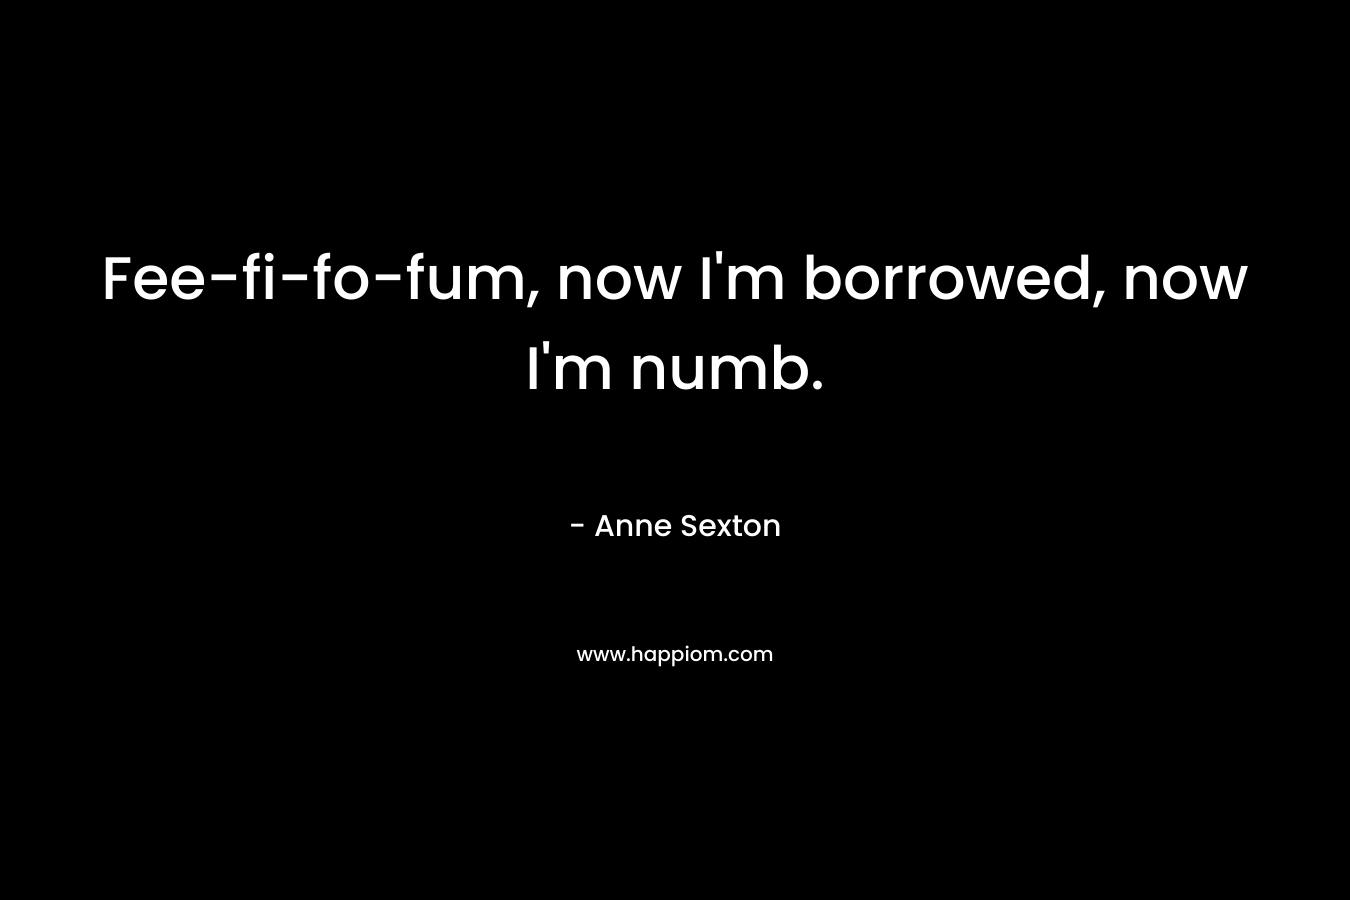 Fee-fi-fo-fum, now I’m borrowed, now I’m numb. – Anne Sexton